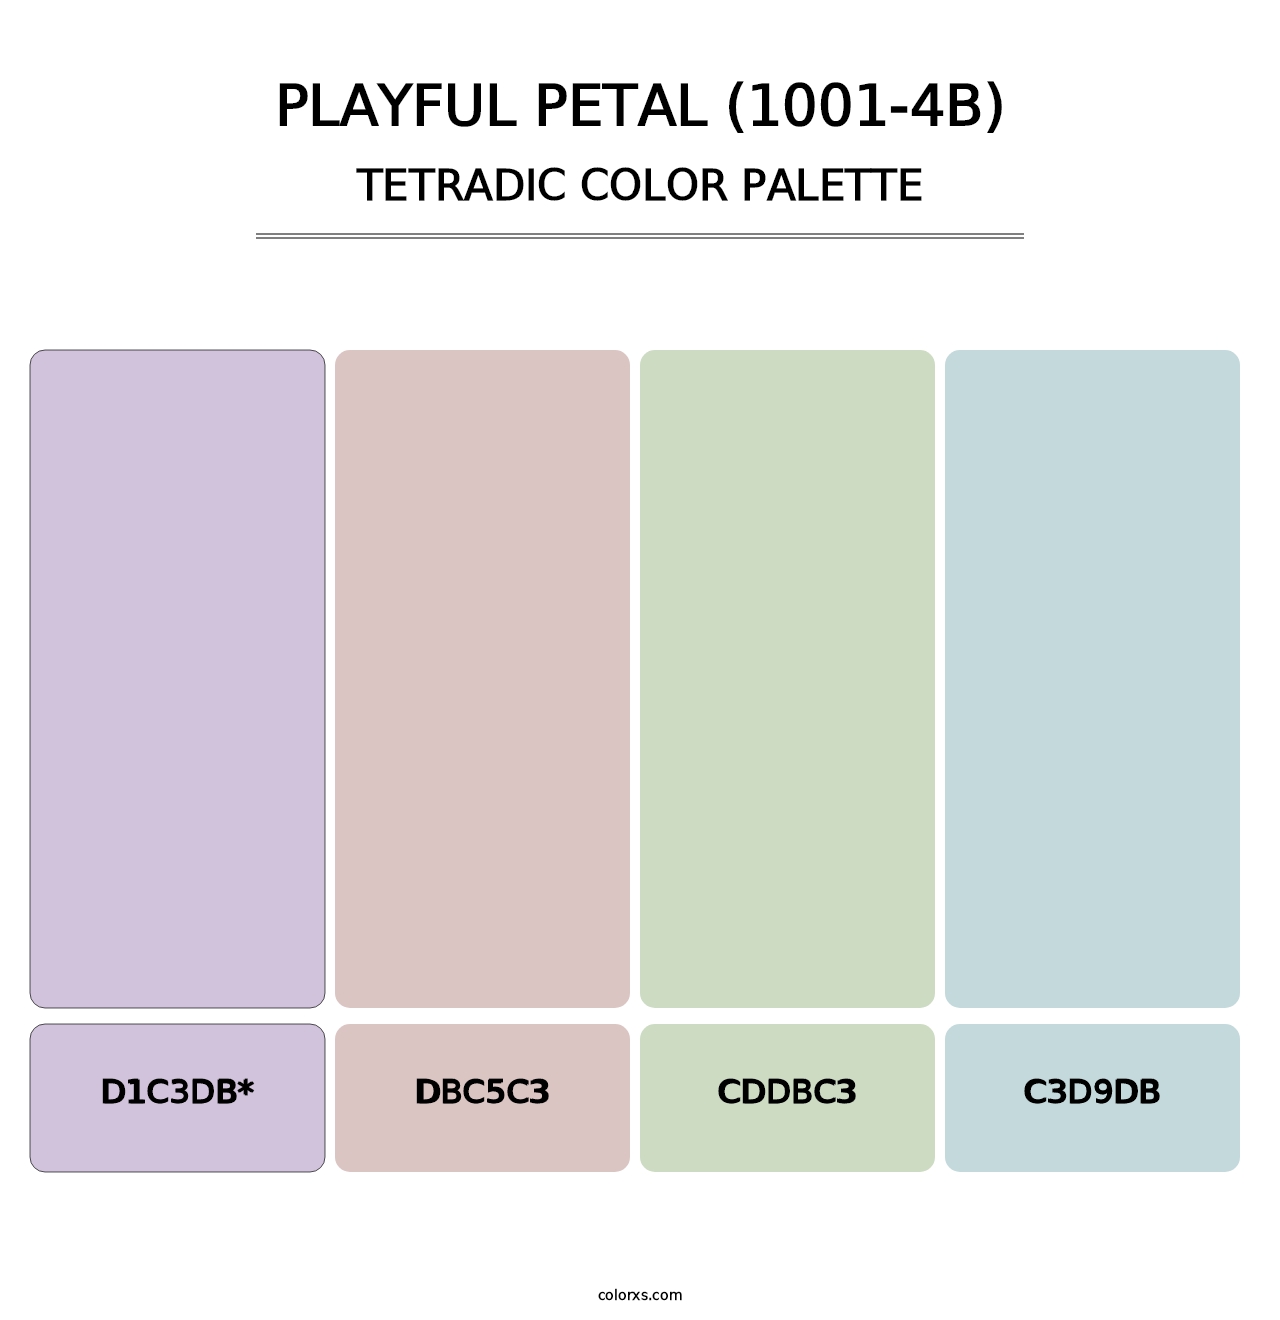 Playful Petal (1001-4B) - Tetradic Color Palette